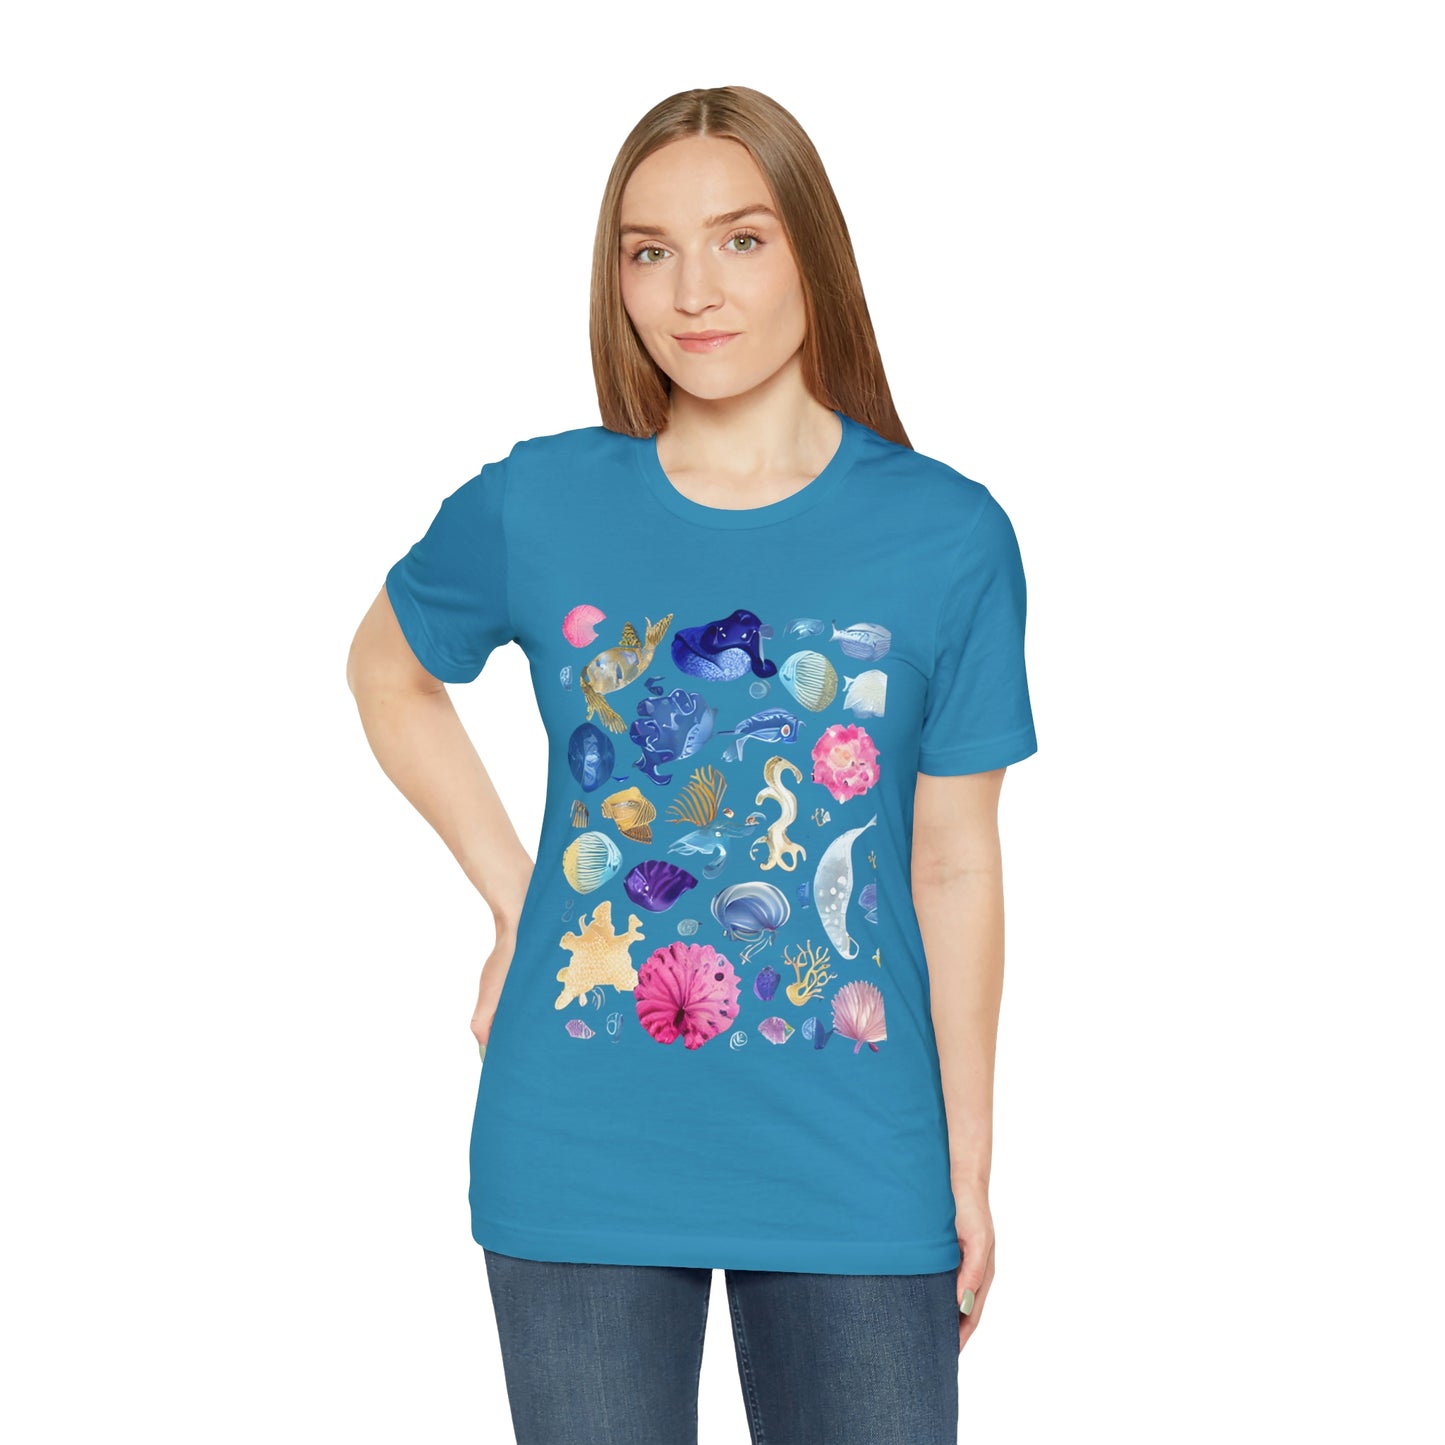 Watercolor Sea Creatures Tshirt Marine Life Ocean Conservation Environment Shirt Tropical Fish Coral Reef Octopus Jellyfish Turtle Shirt